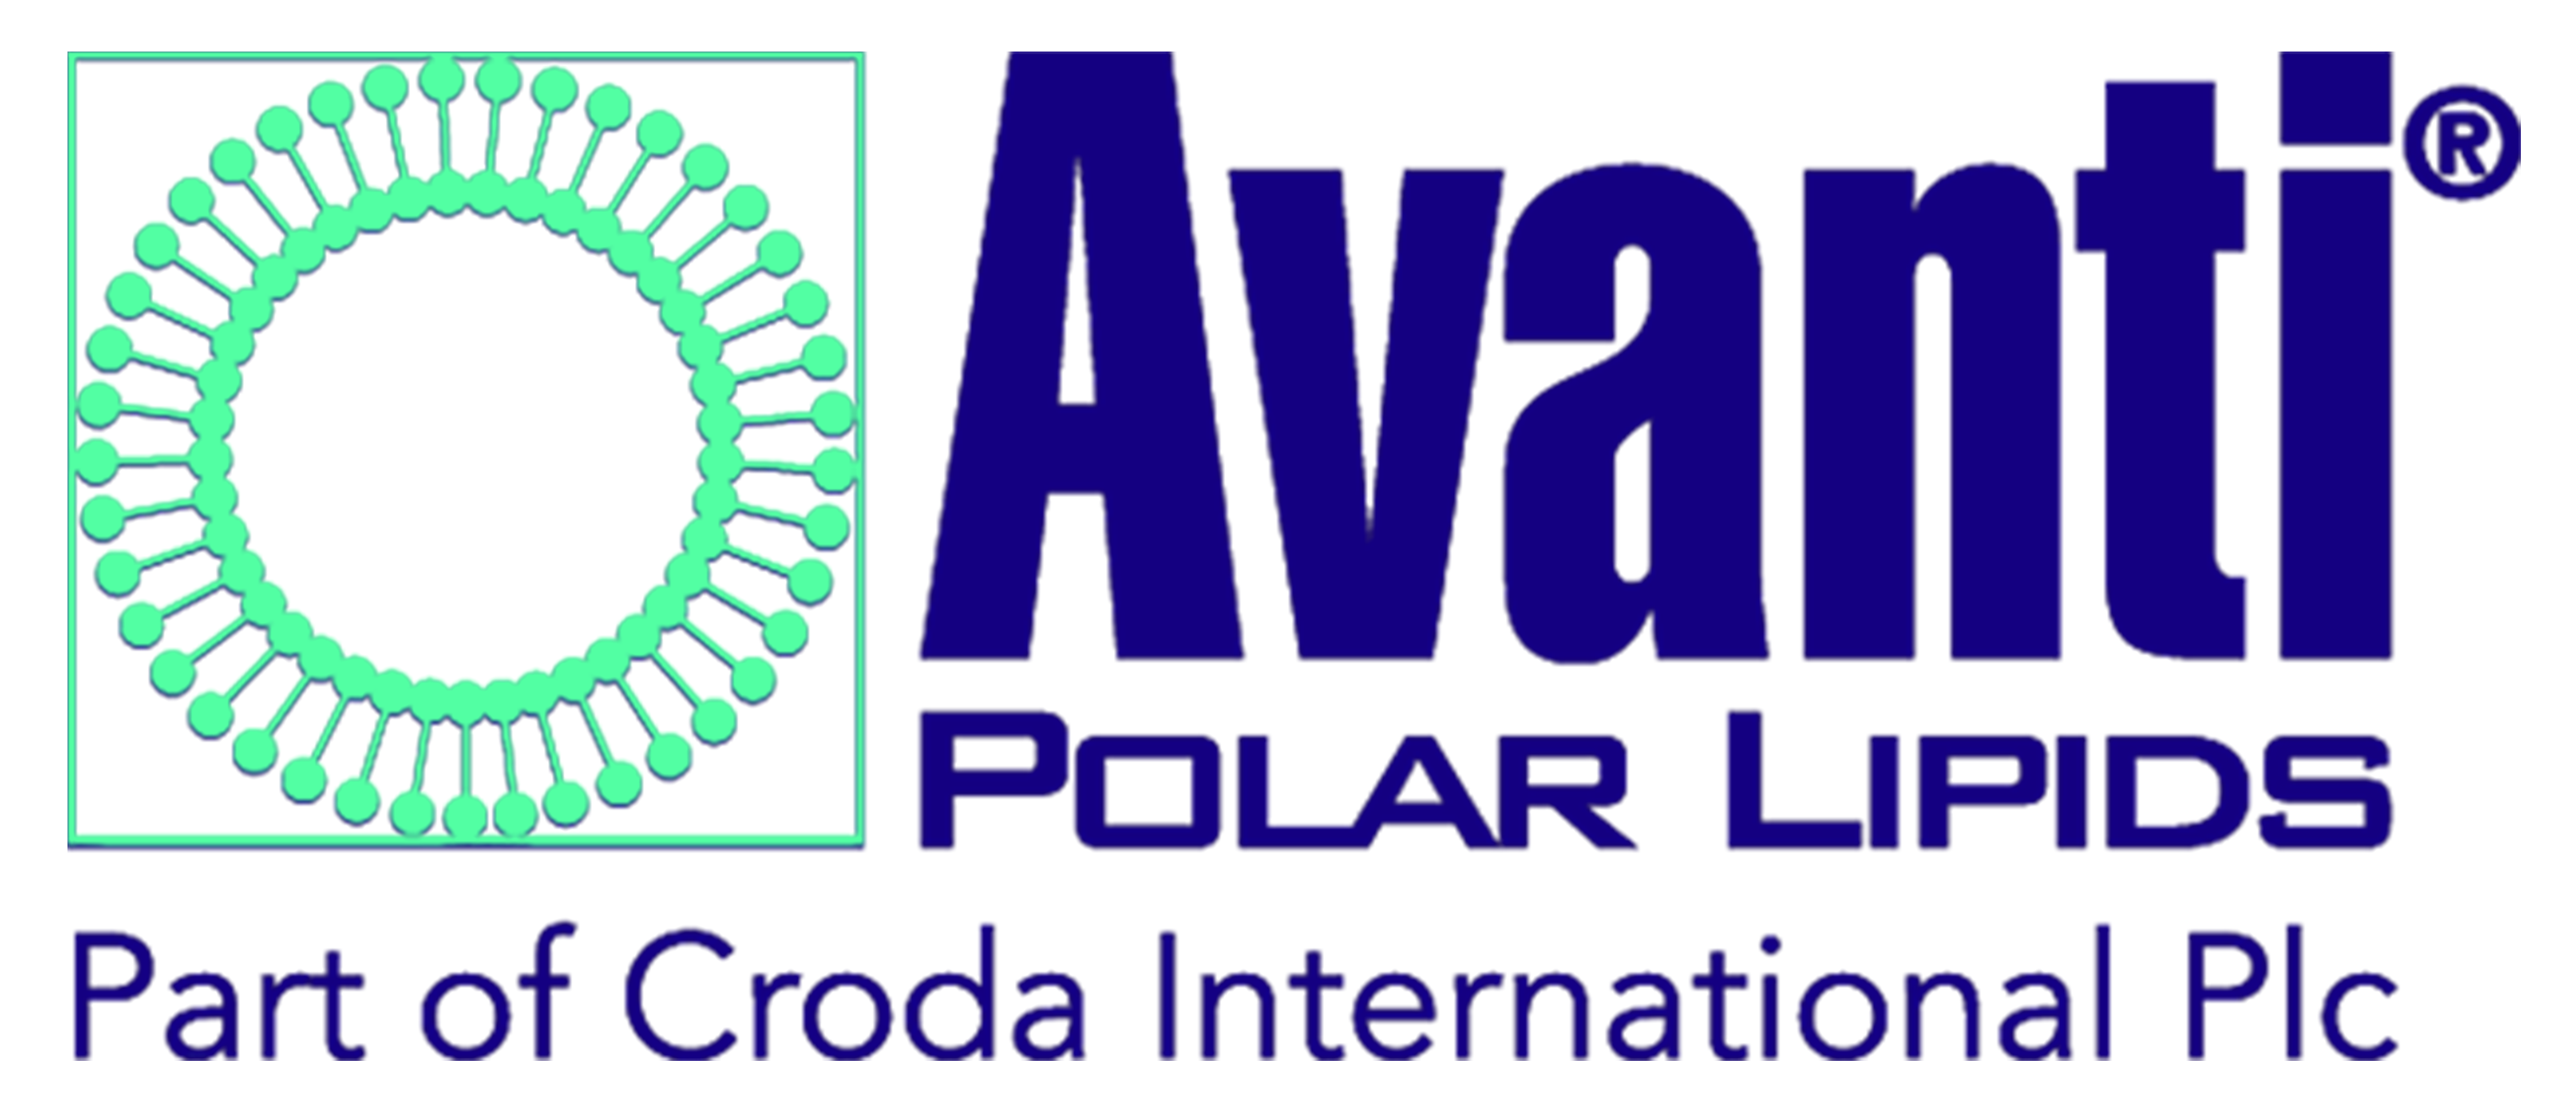 Avanti Polar Lipids Inc